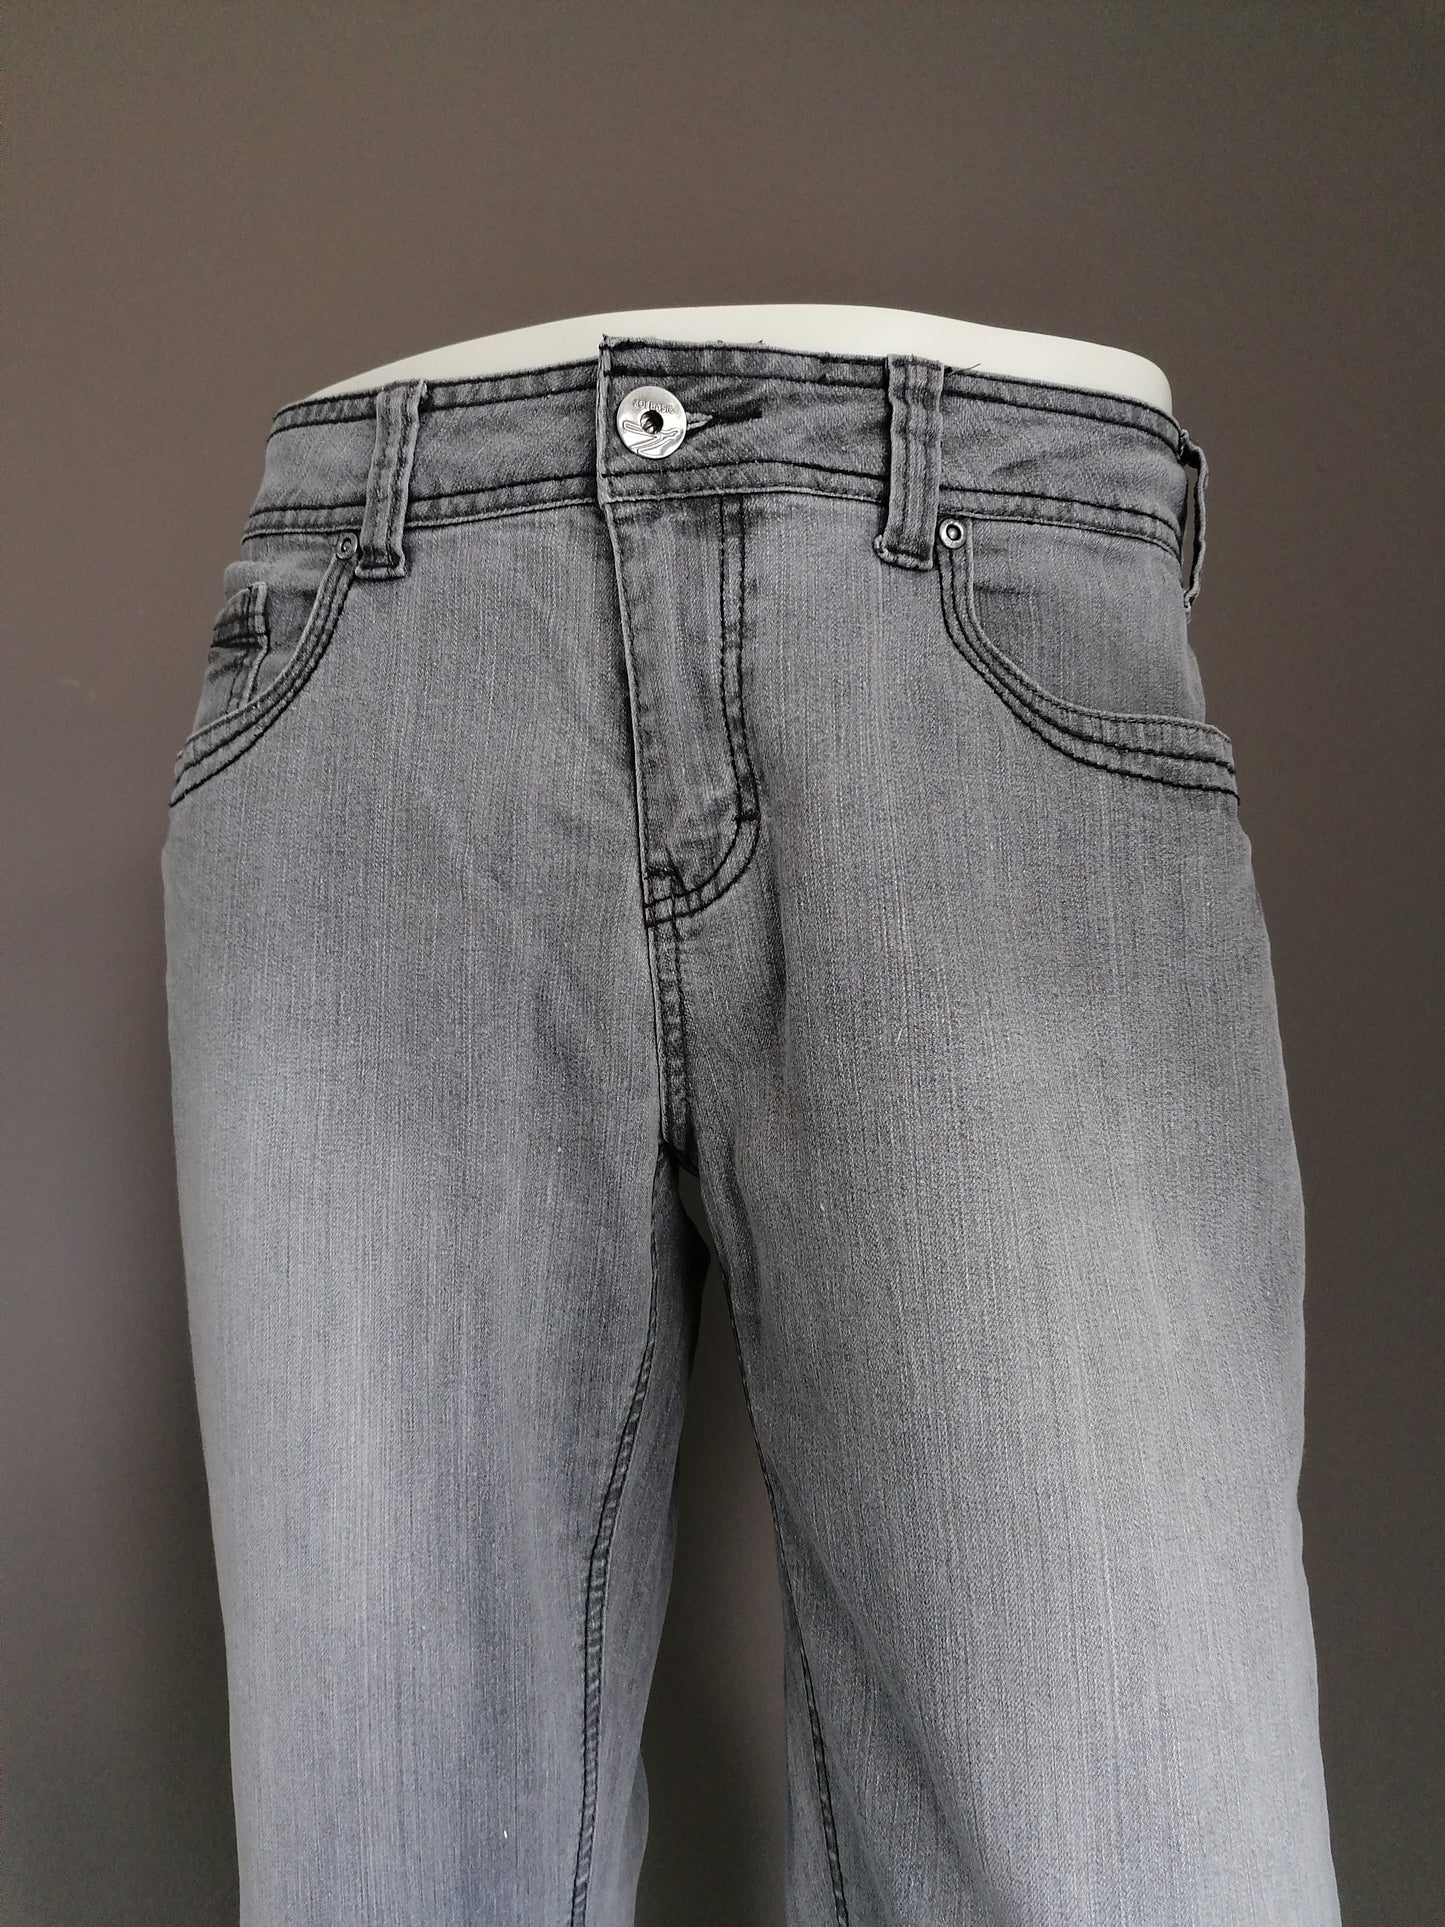 Zoi Denim Jeans. Color gris. Estirar. Tamaño W34 - L30